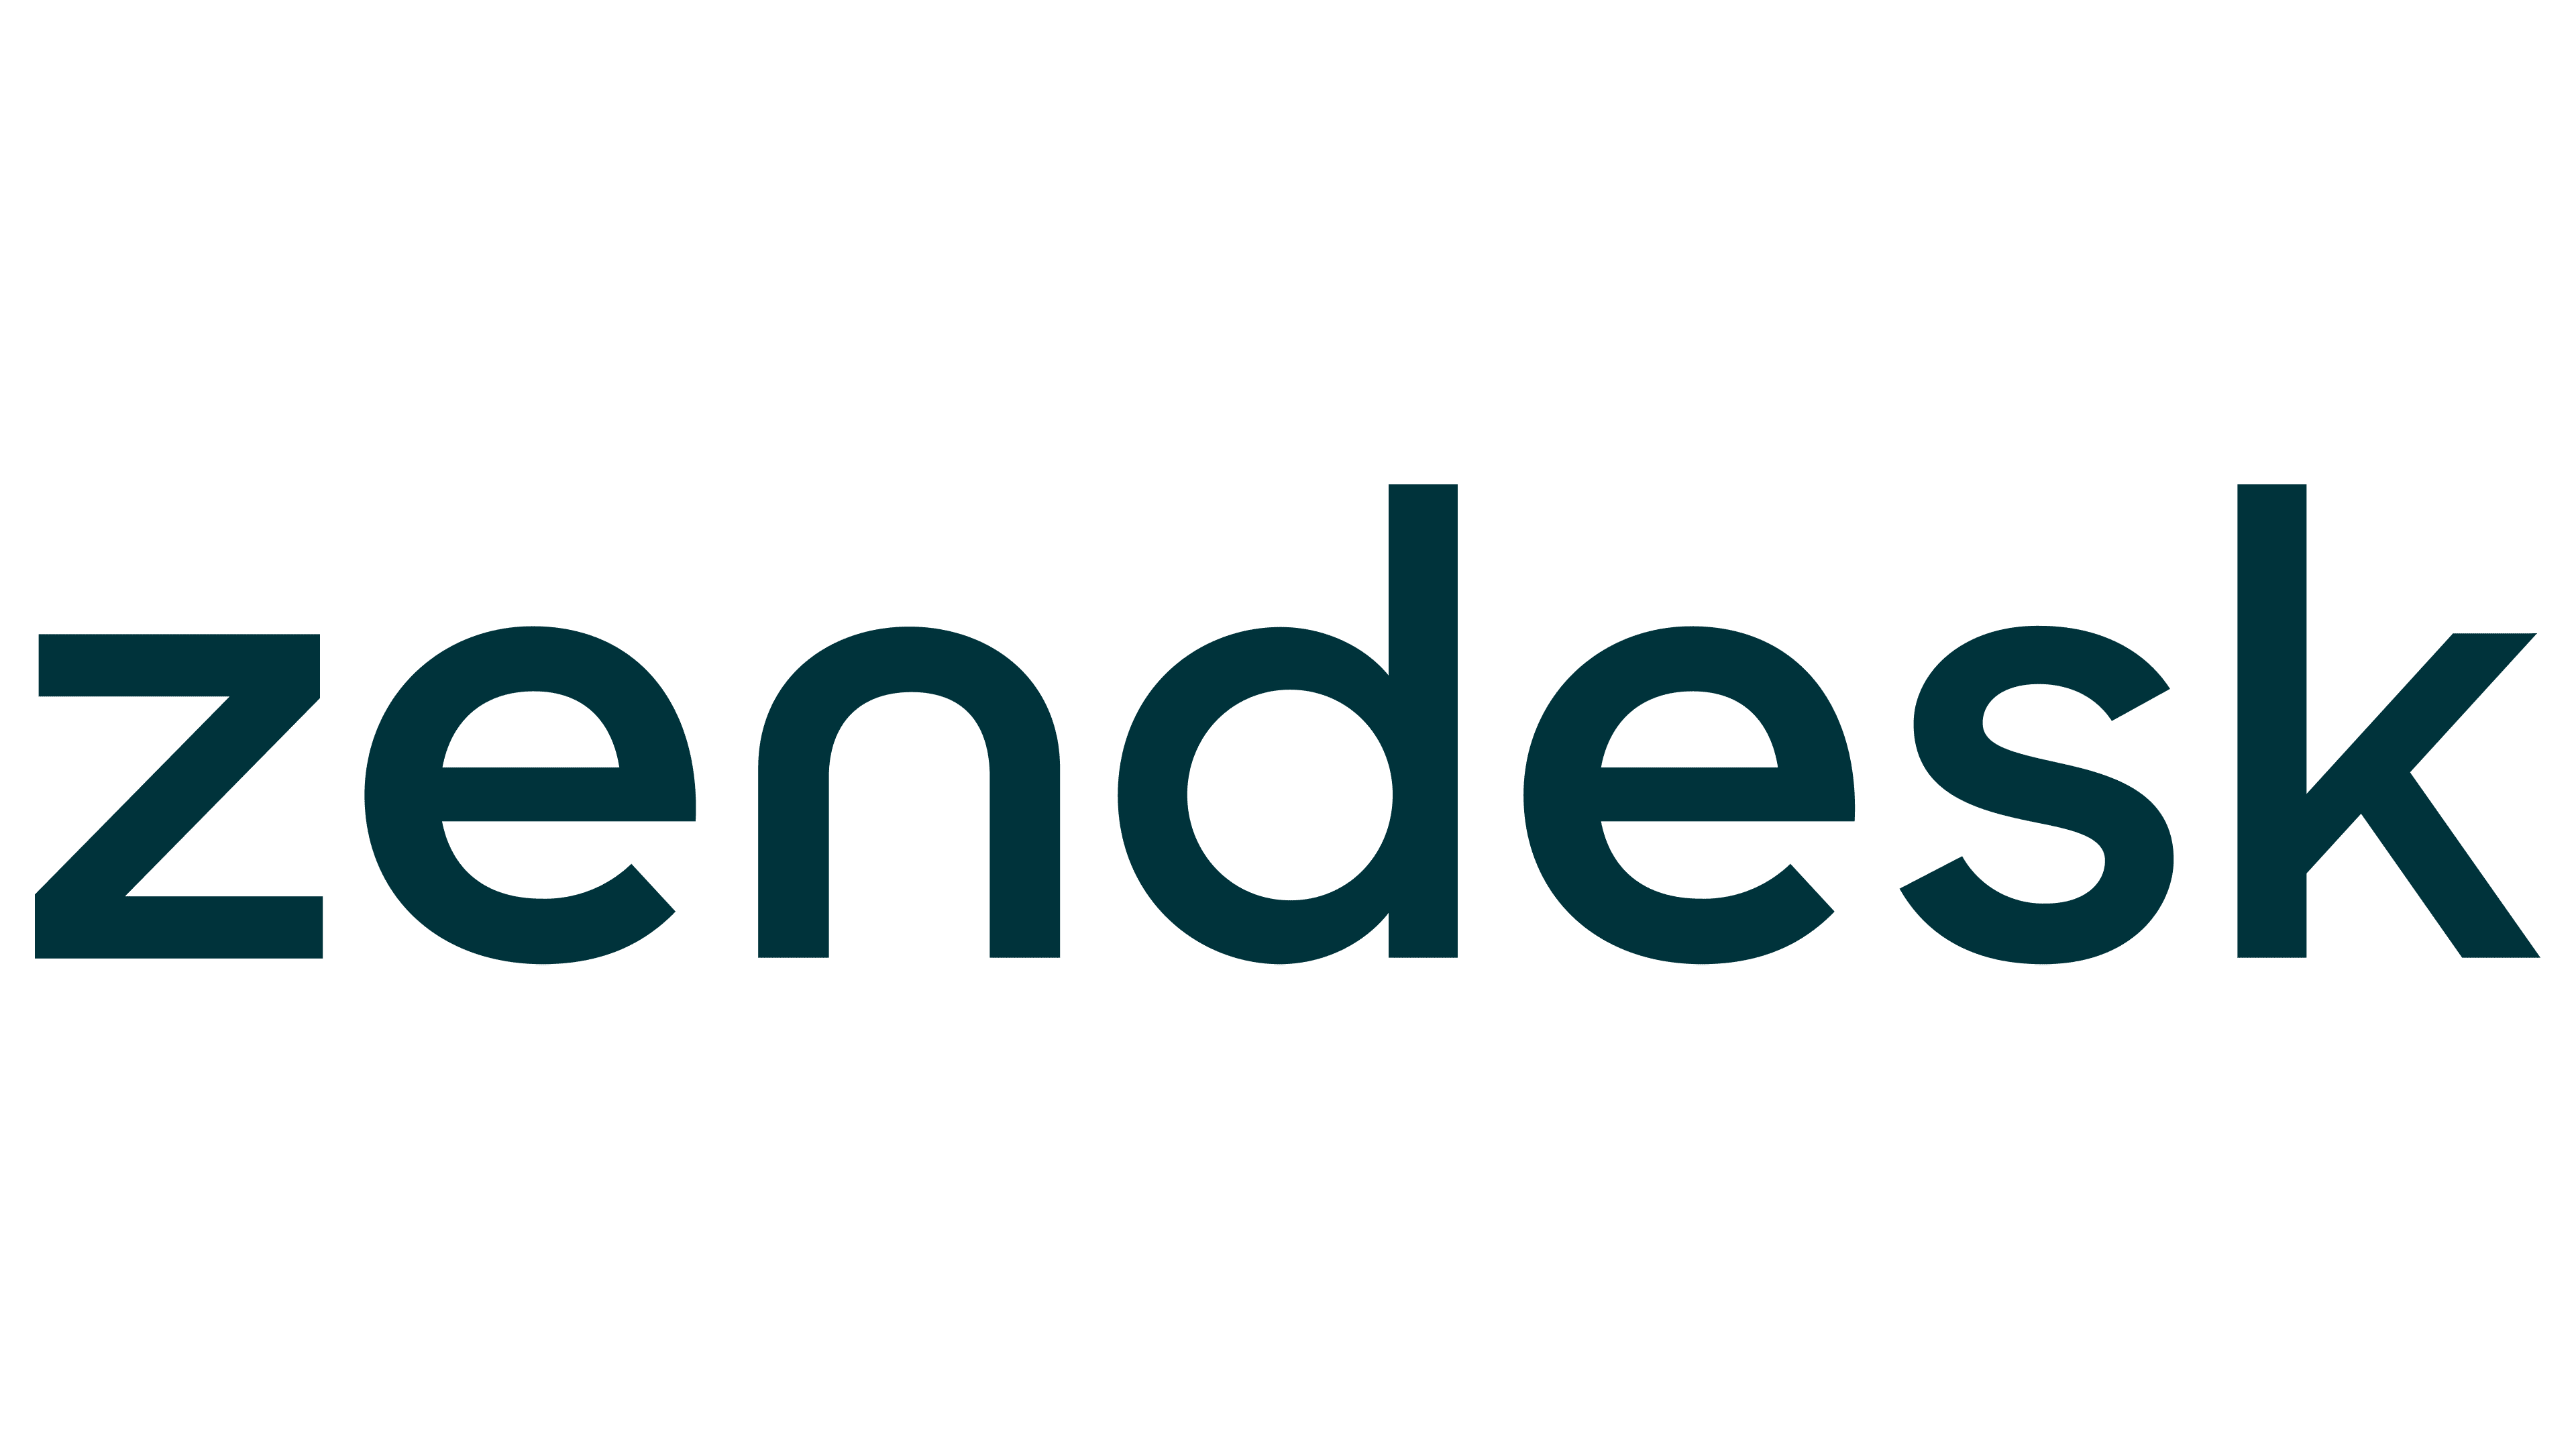 Zendesk logo on a green background.